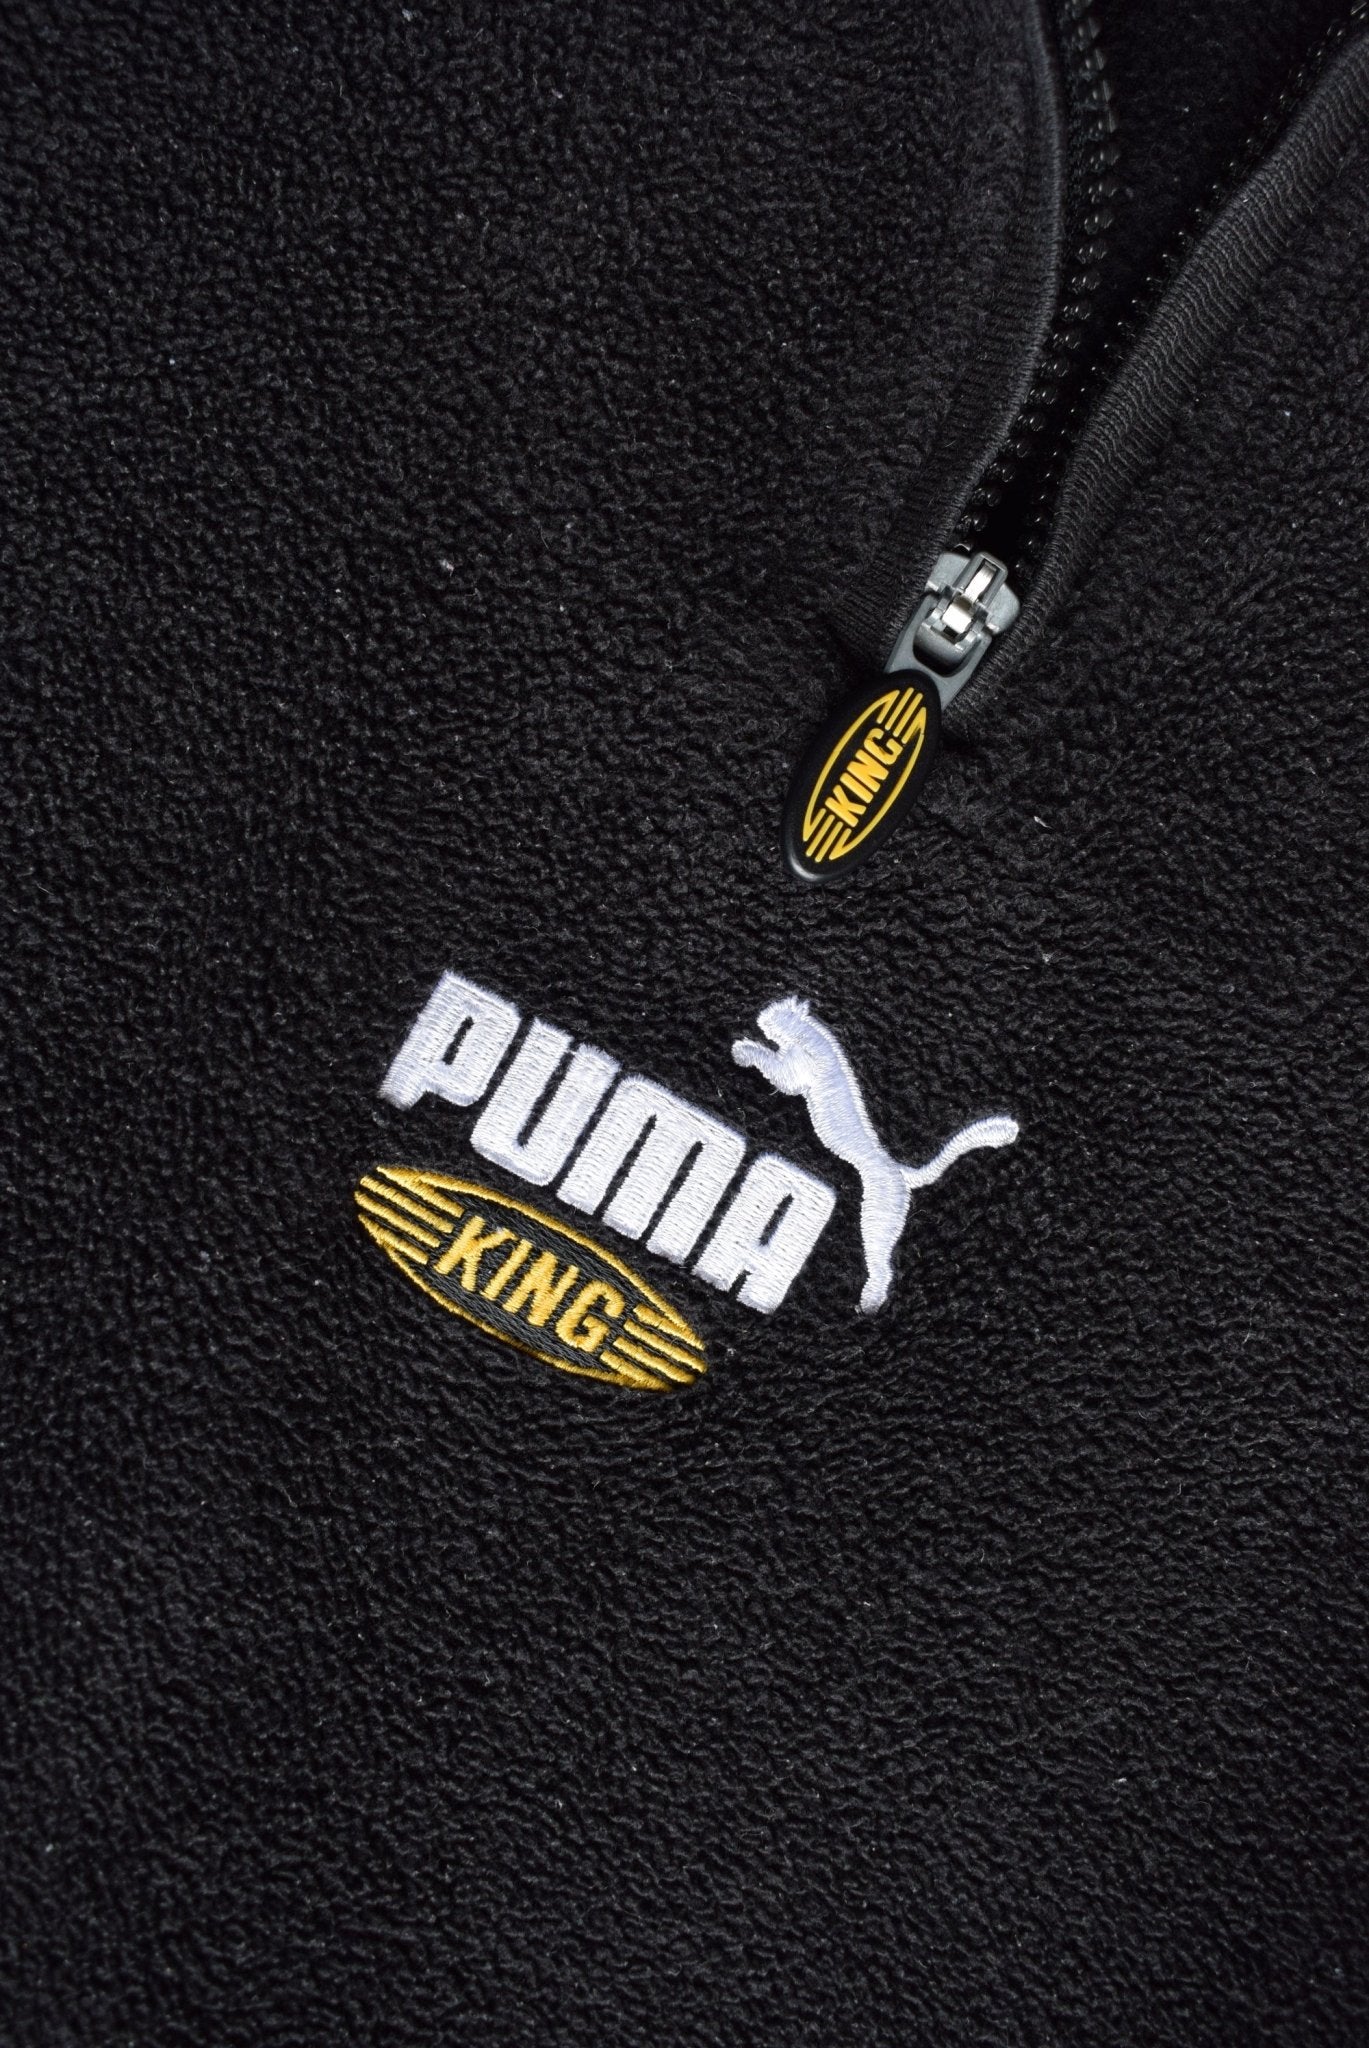 *RARE* Vintage 90s Puma King Embroidered Quarter Zip Fleece (XL/XXL) - Retrospective Store